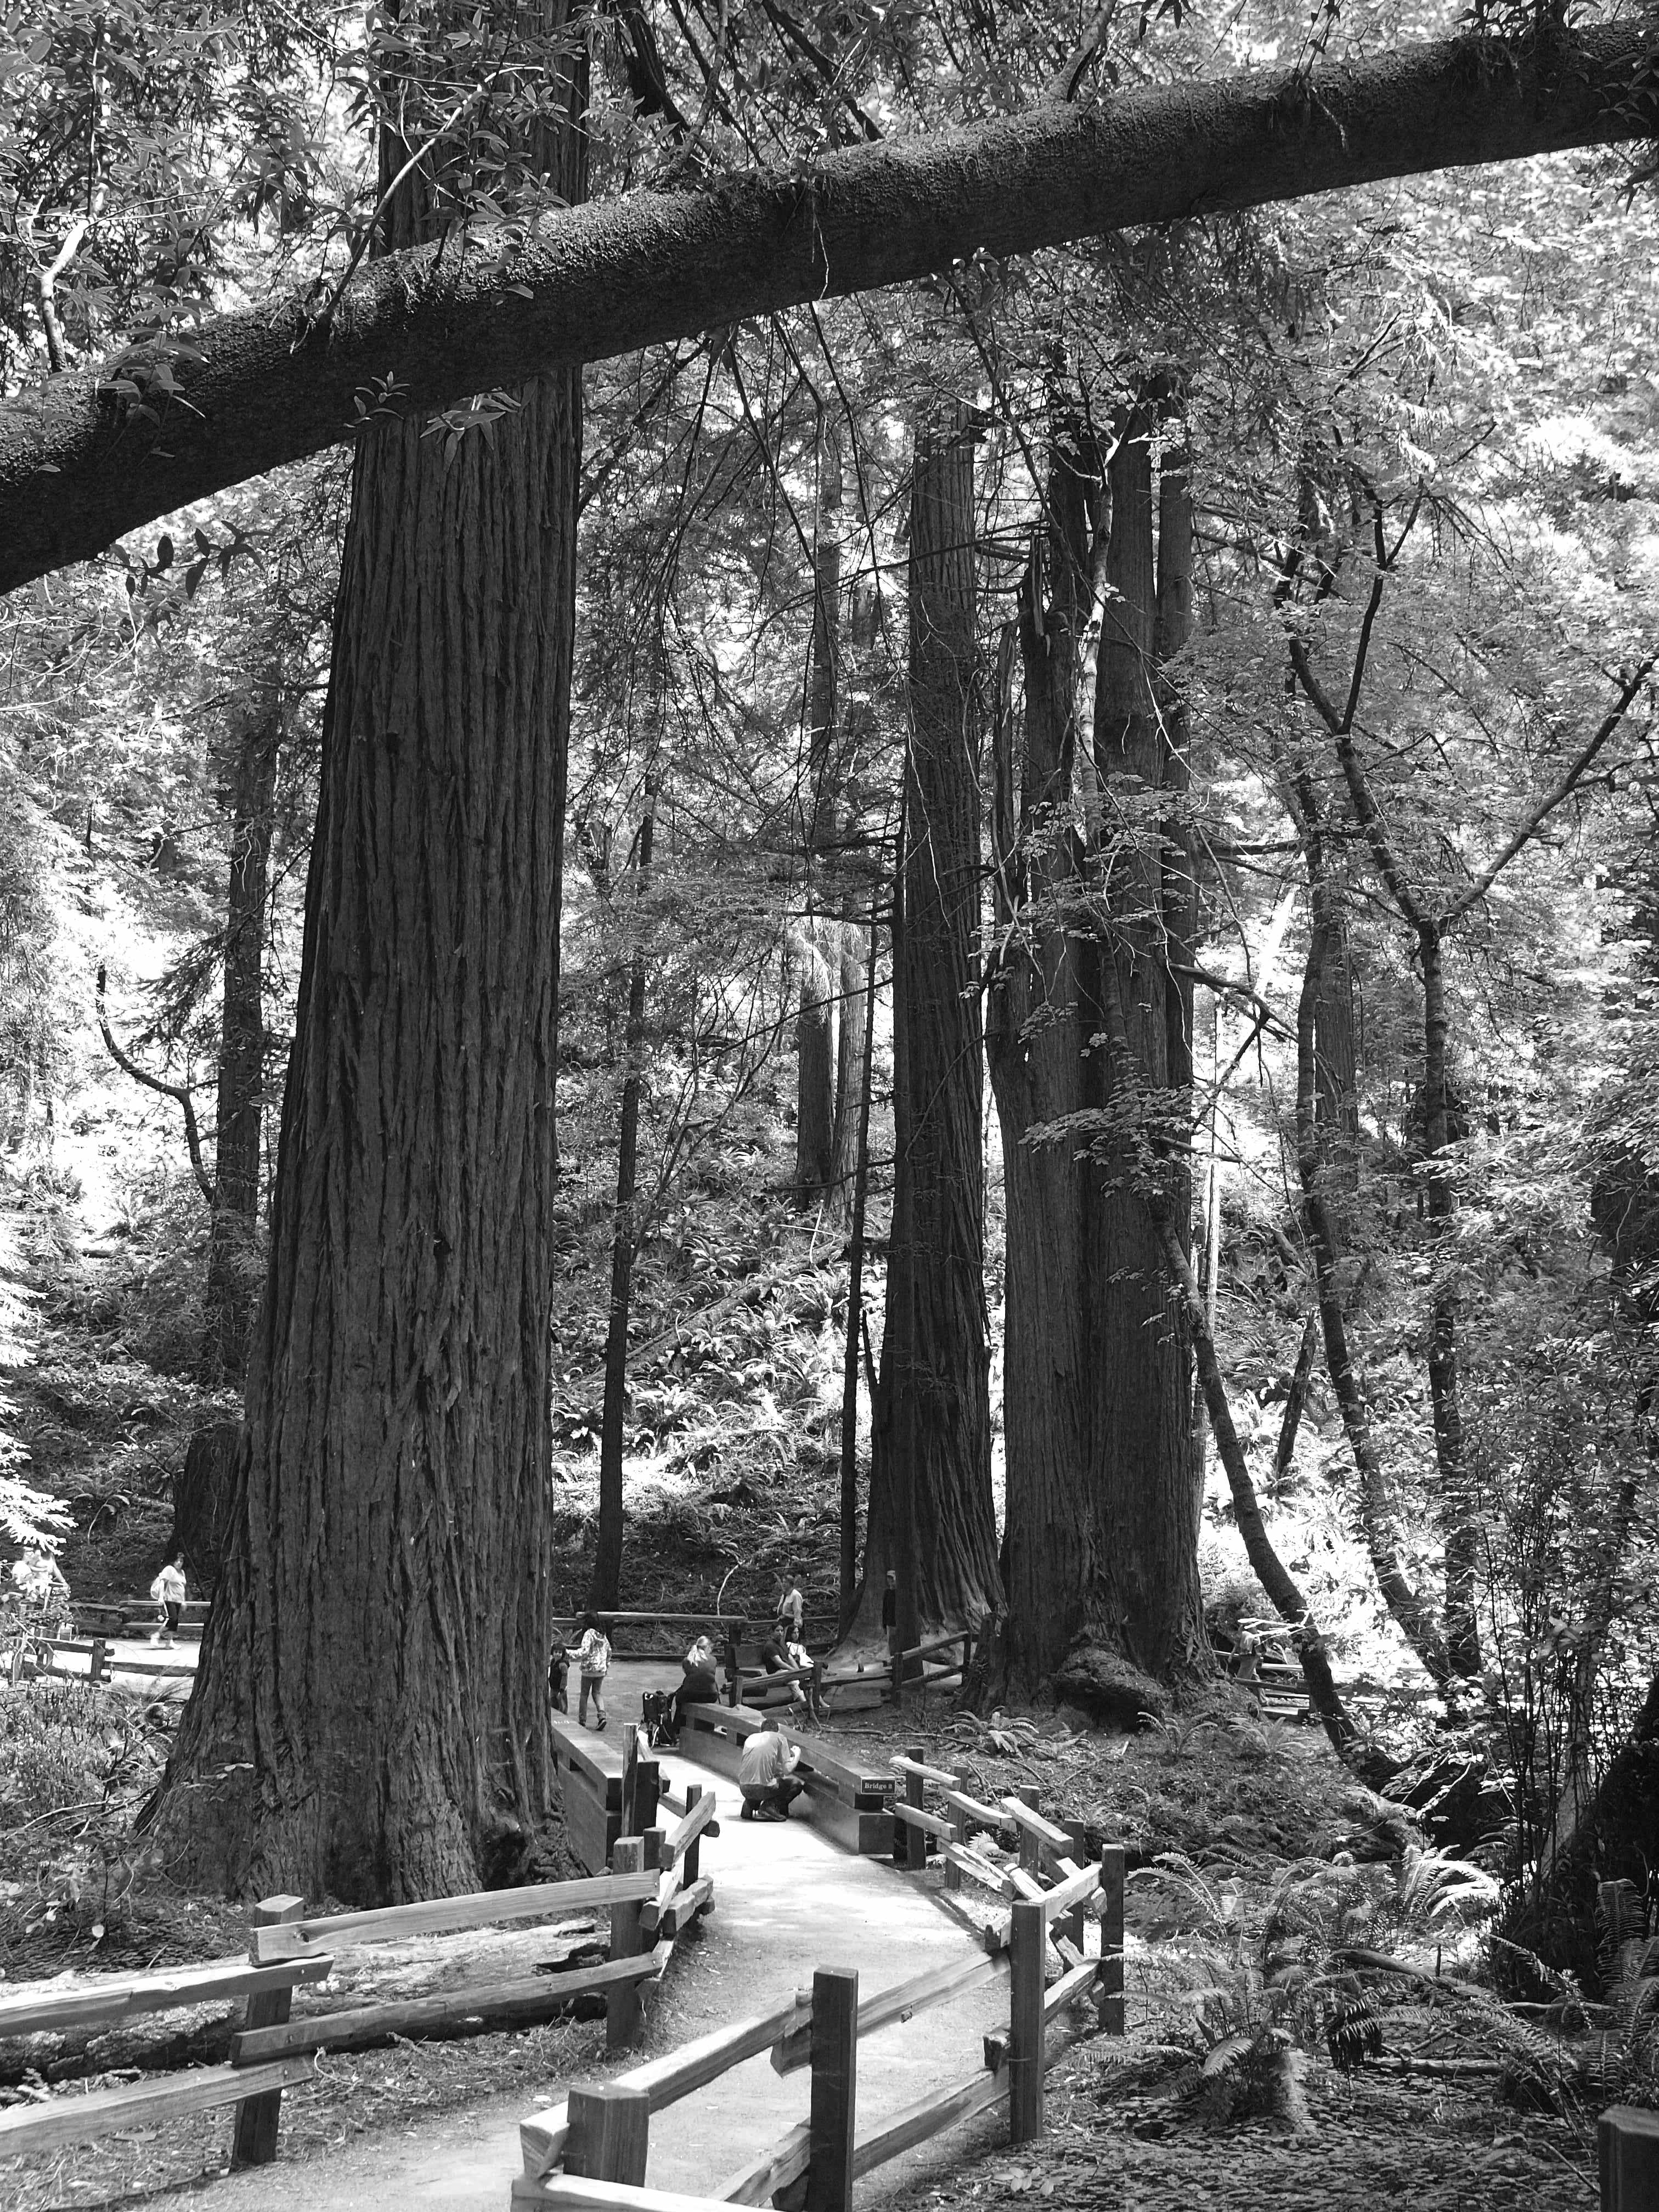 A wooden bridge crosses Redwood Creek in the redwood forest